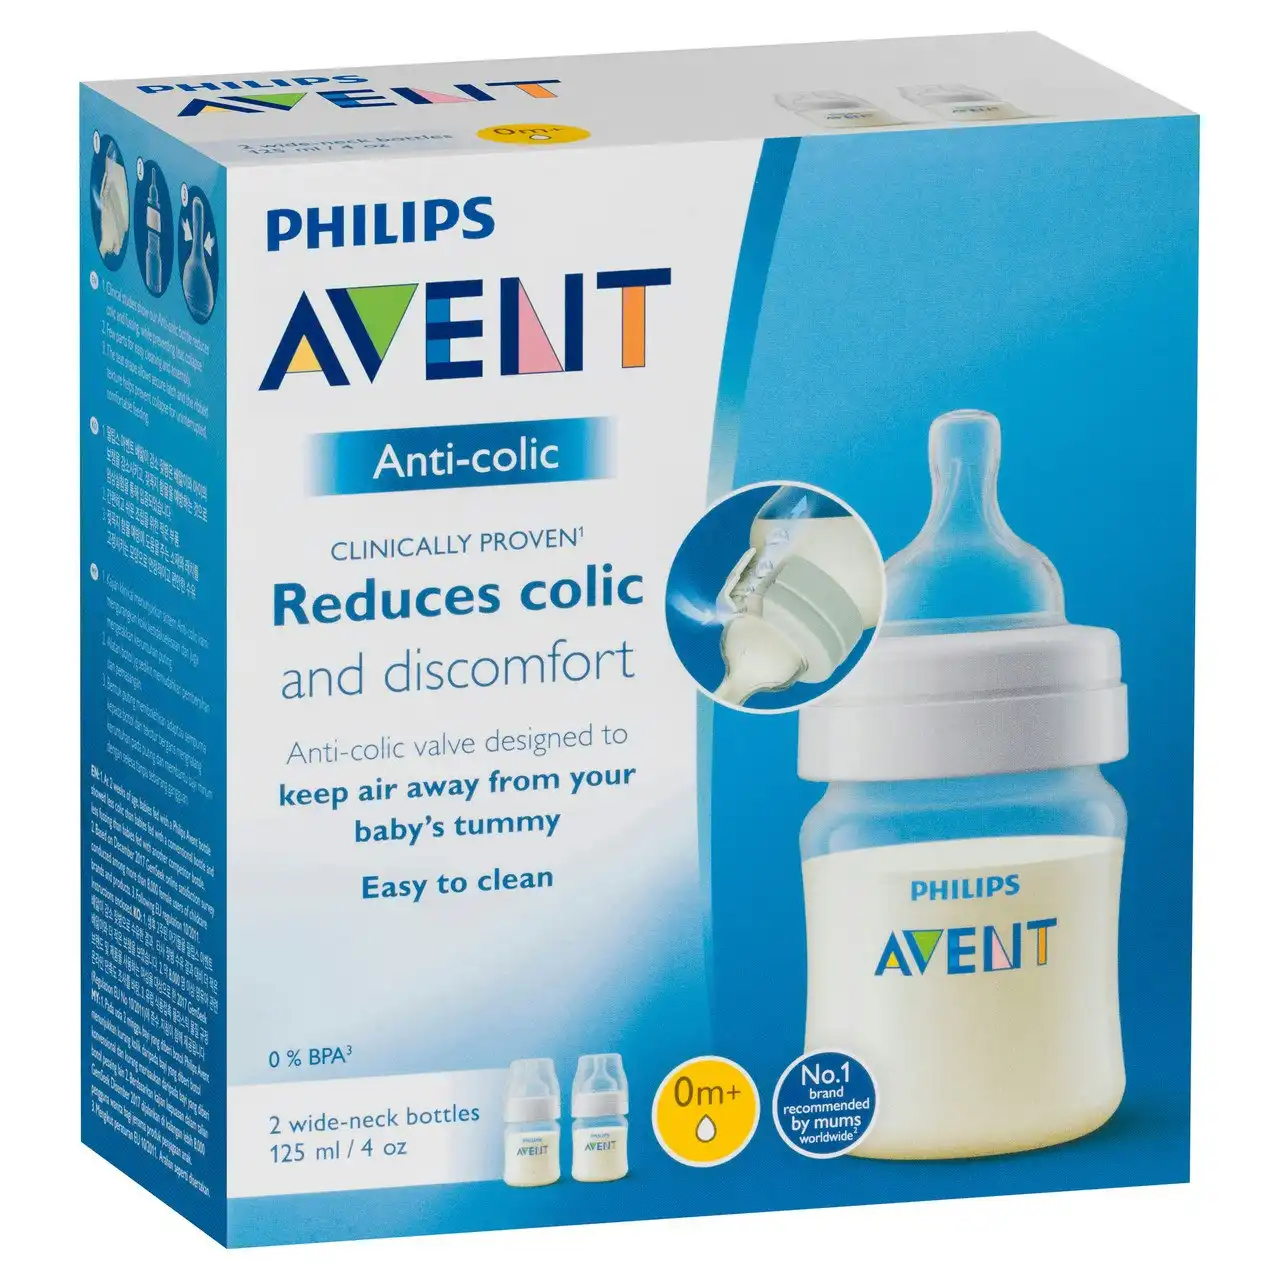 Philips Avent Anti-colic Baby Bottles 2 Pack 125mL